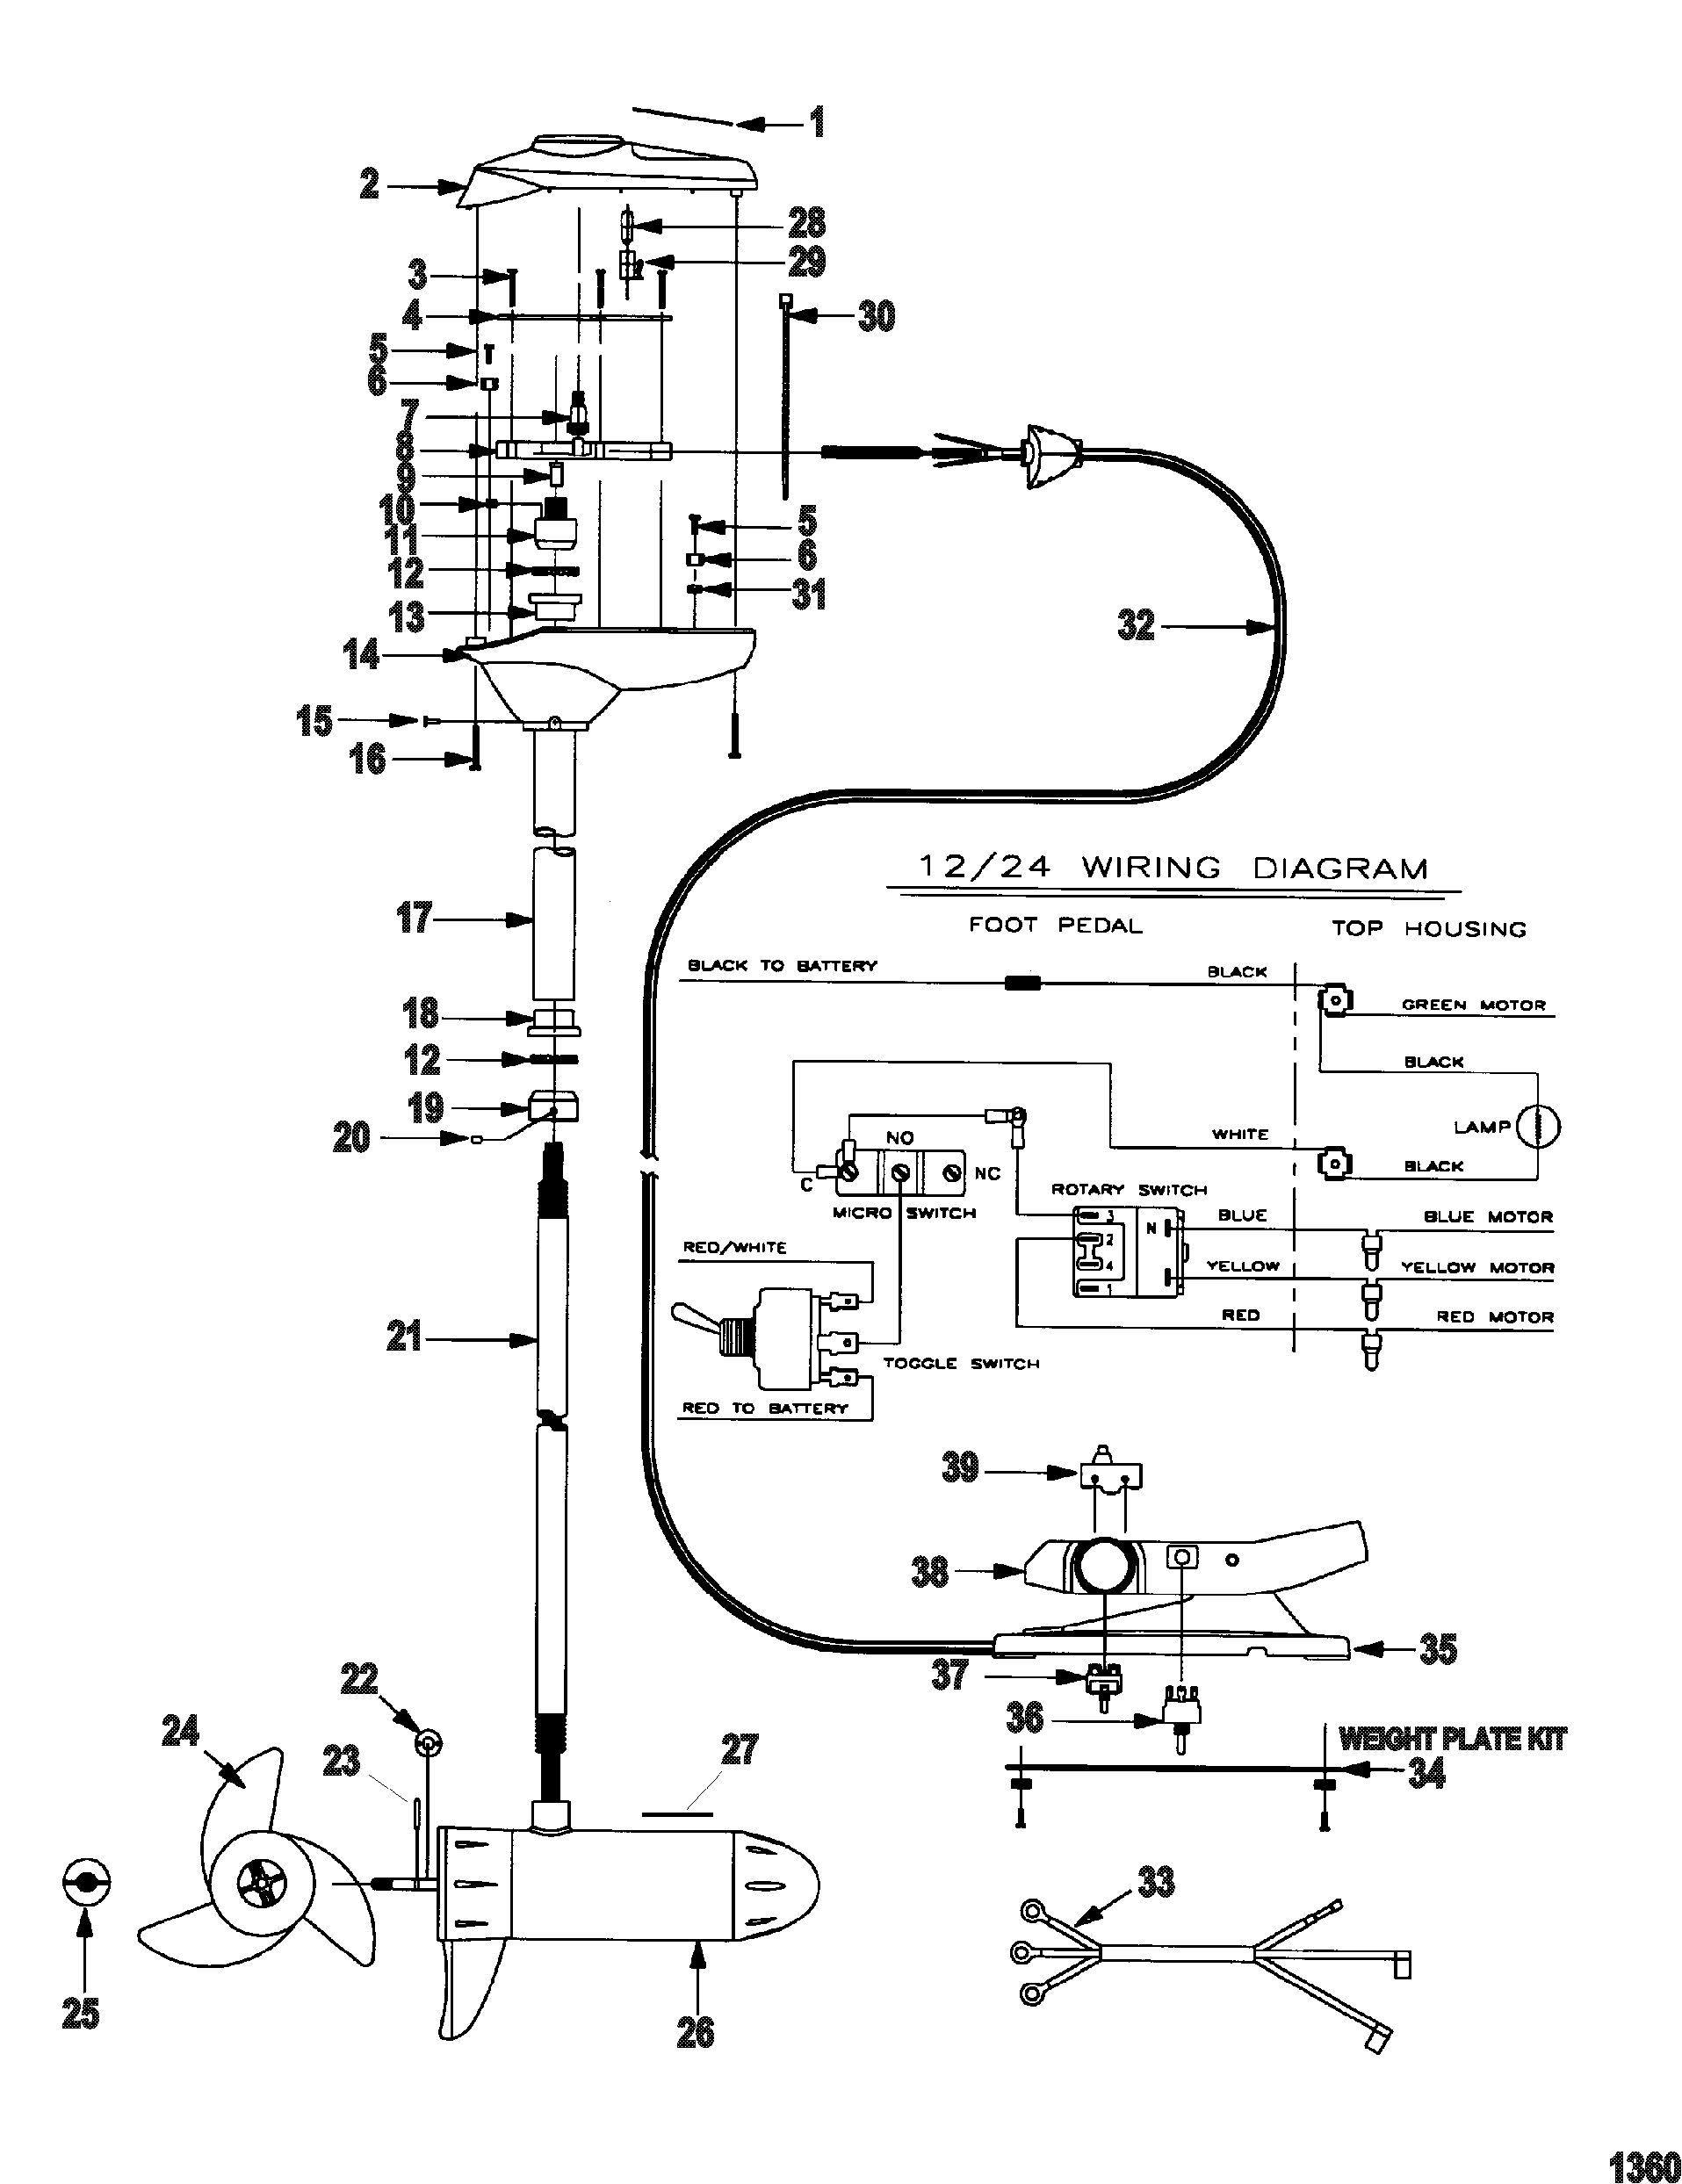 Motorguide Trolling Motor Wiring Diagram - impremedia.net motor wire diagram guide 